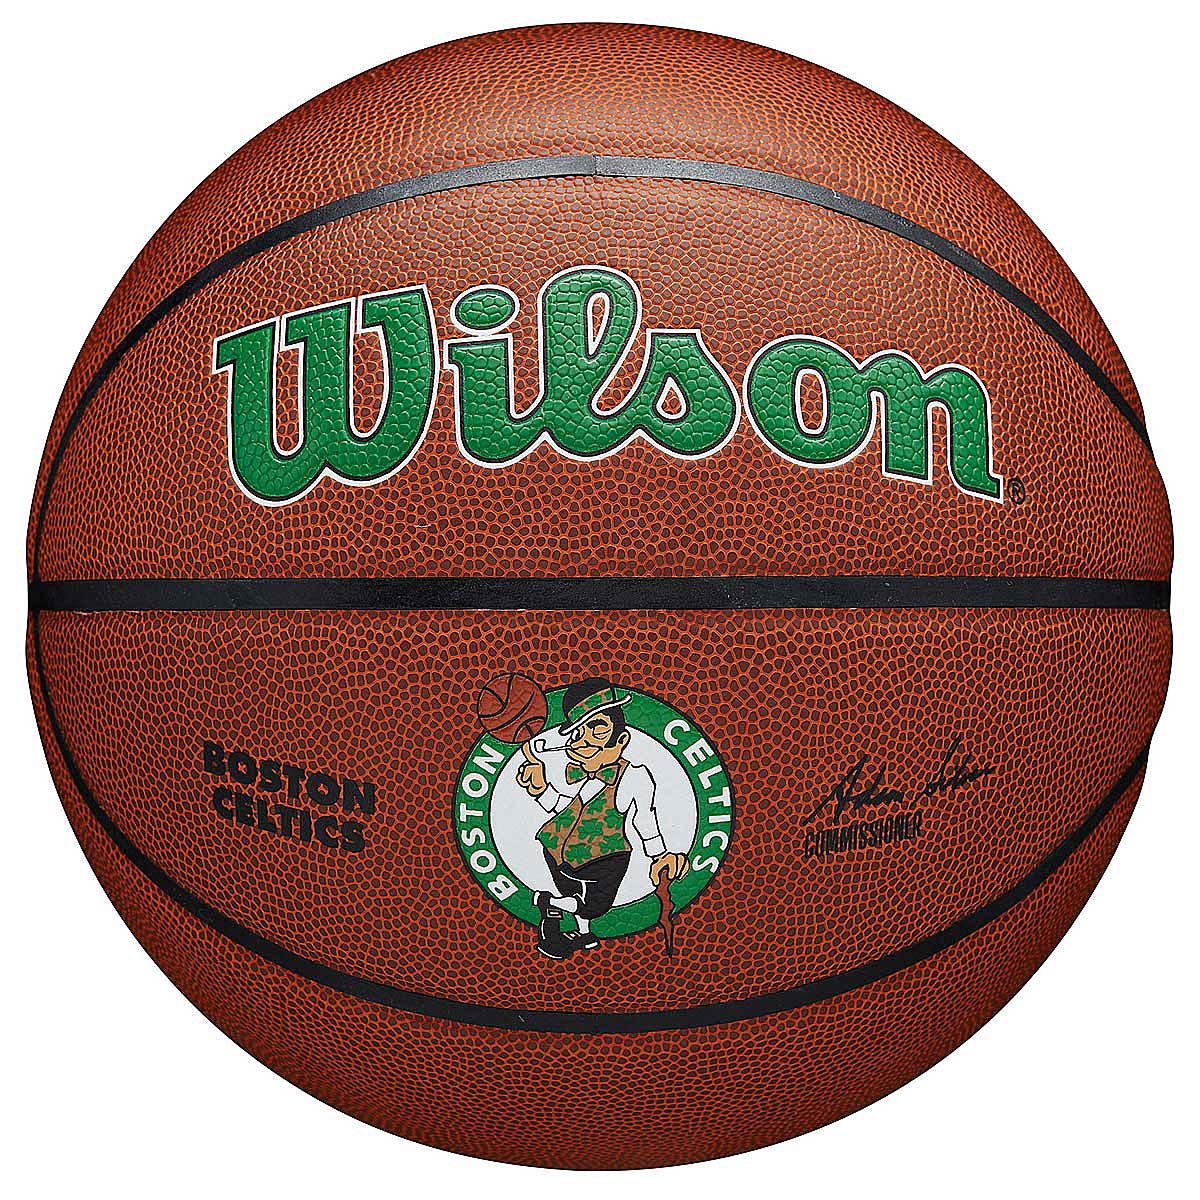 Image of Wilson NBA Boston Celtics Team Composite Basketball, Green